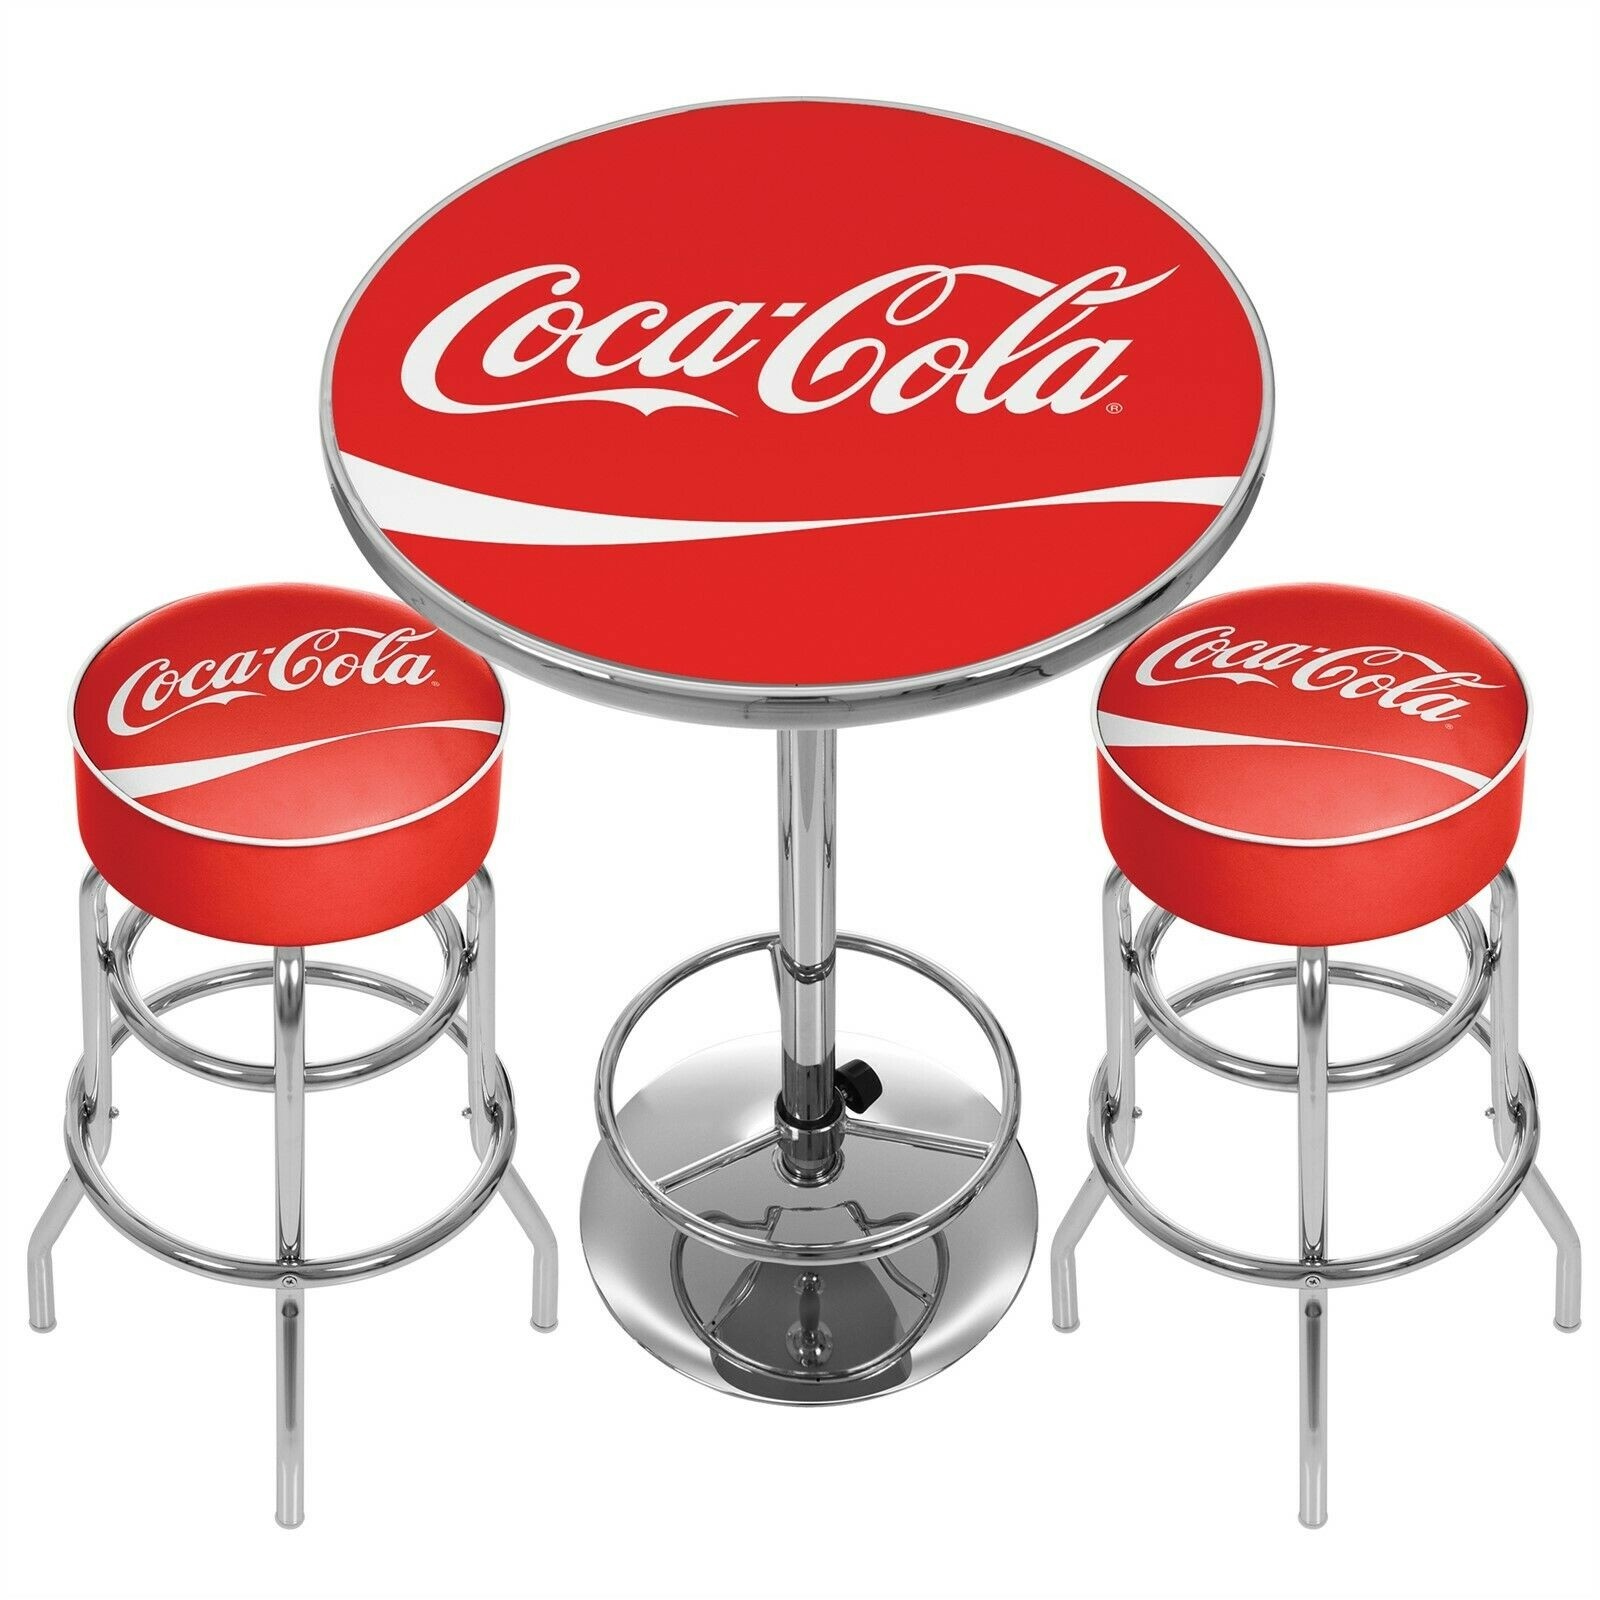 Budweiser bar stool stools item